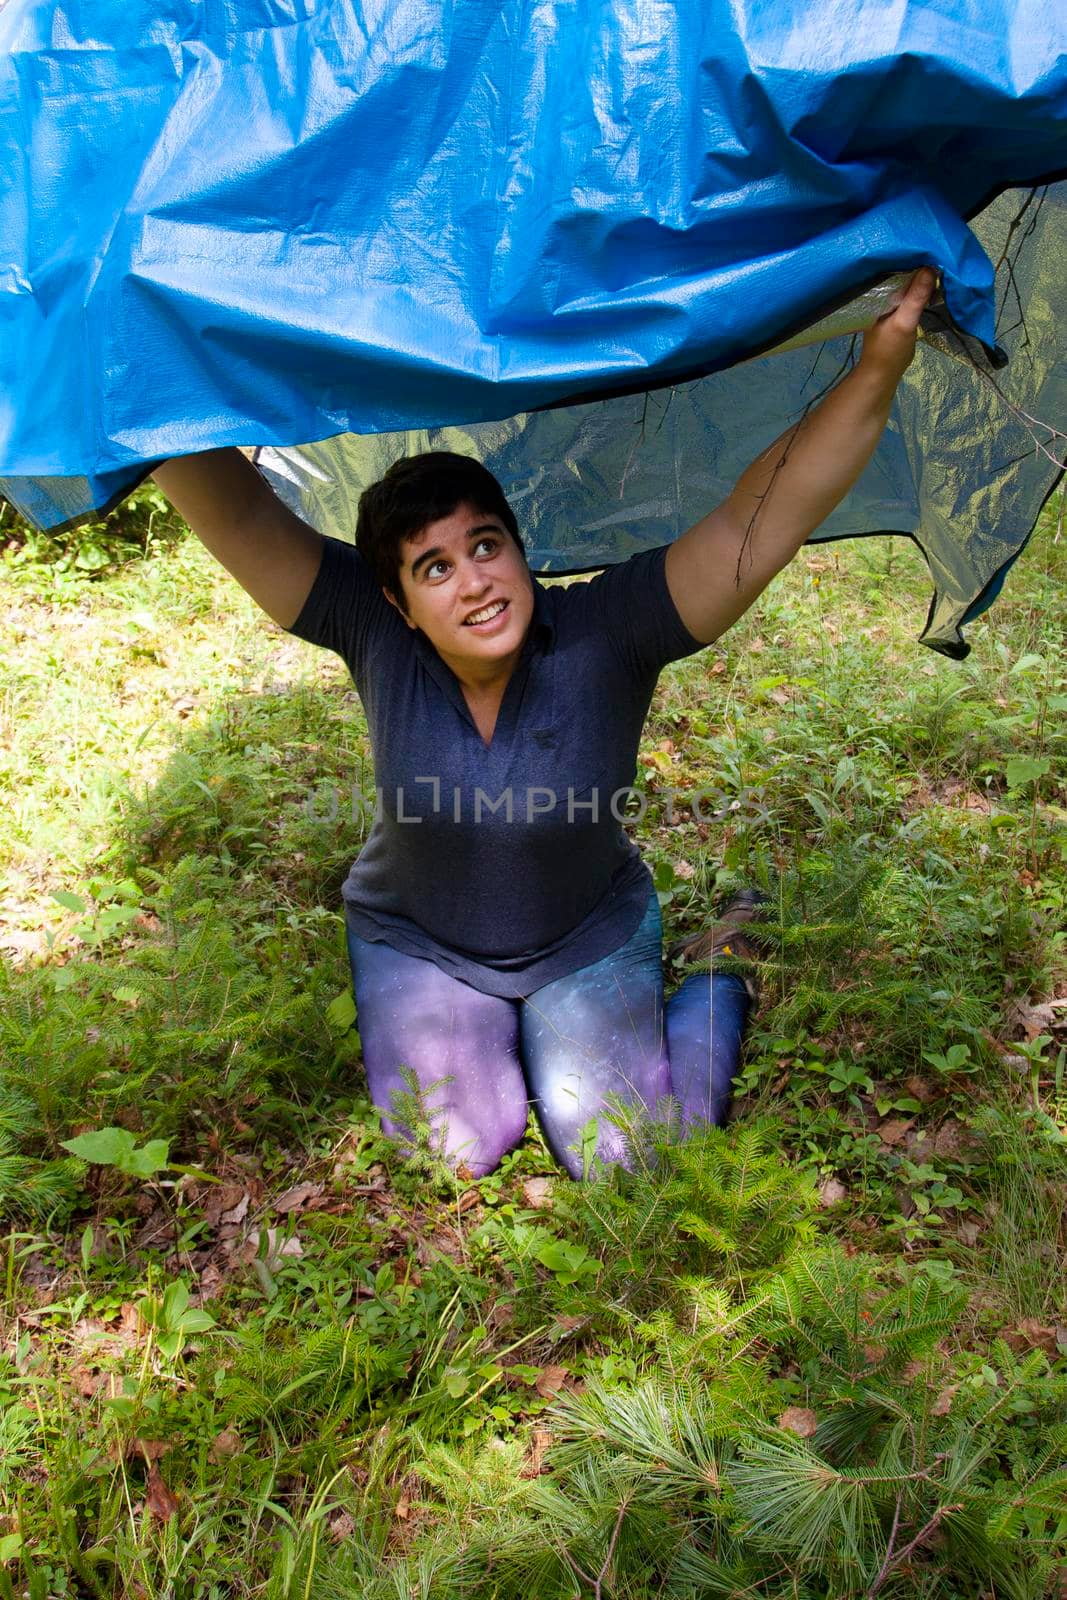 shelter under a tarp  by rustycanuck